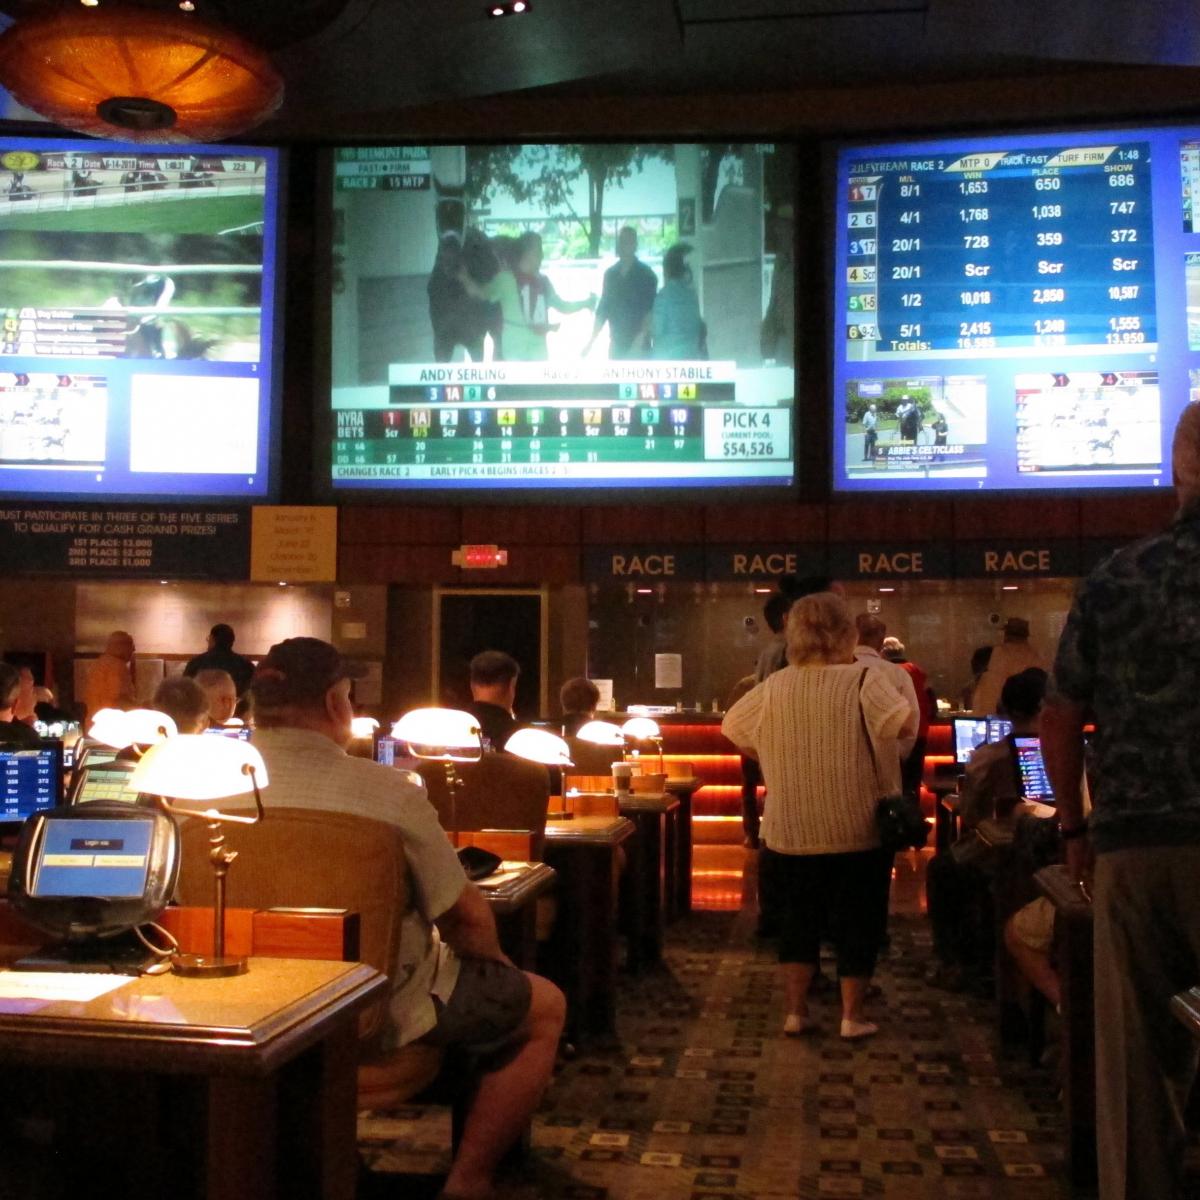 delaware park casino sports betting hours paul